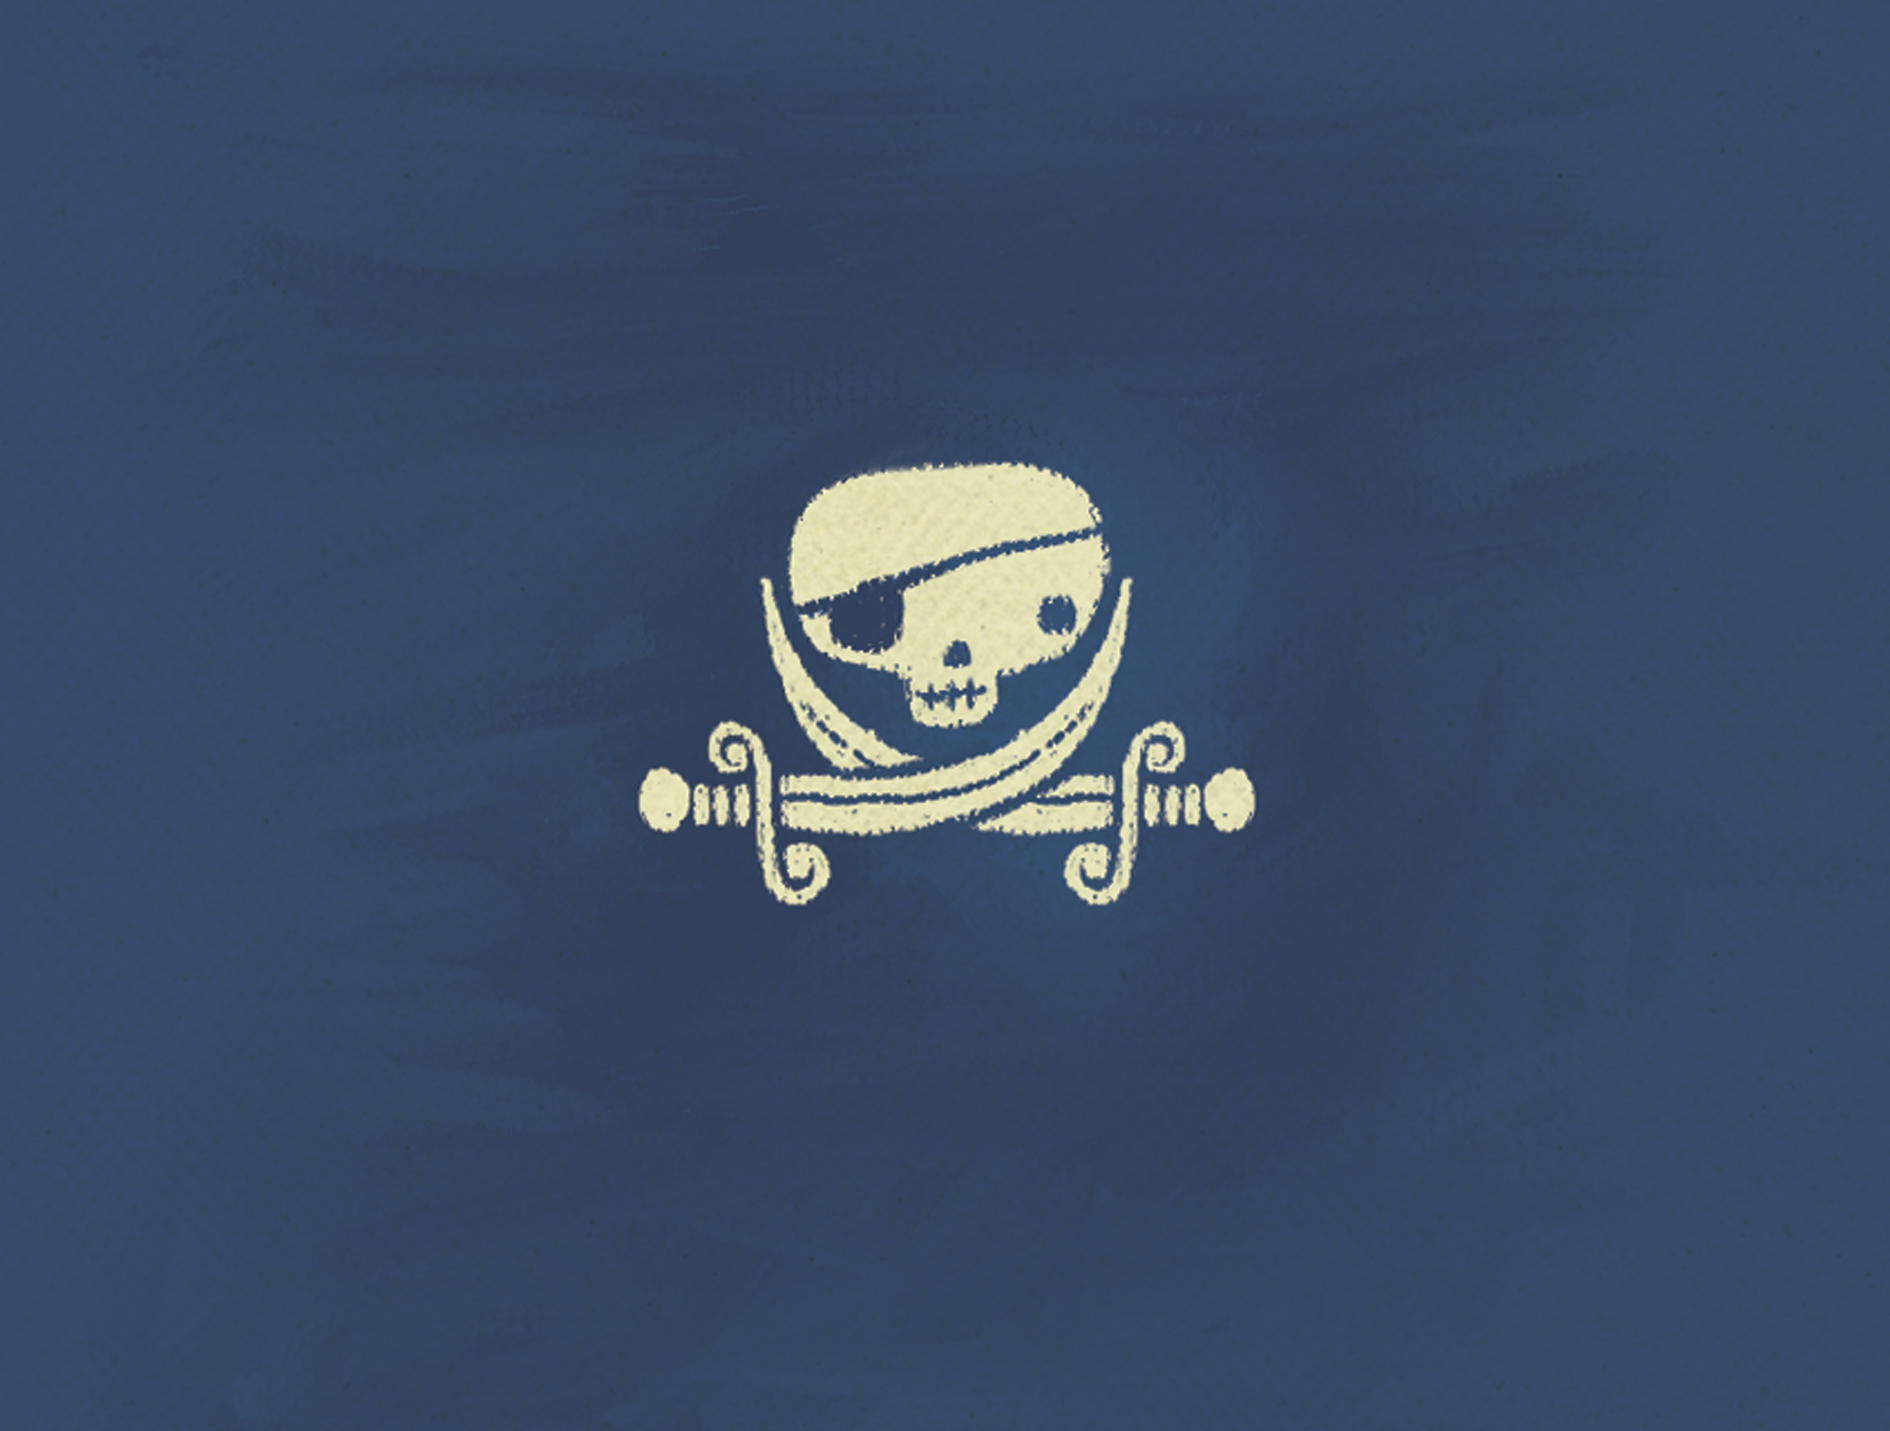 pirates flag.jpg